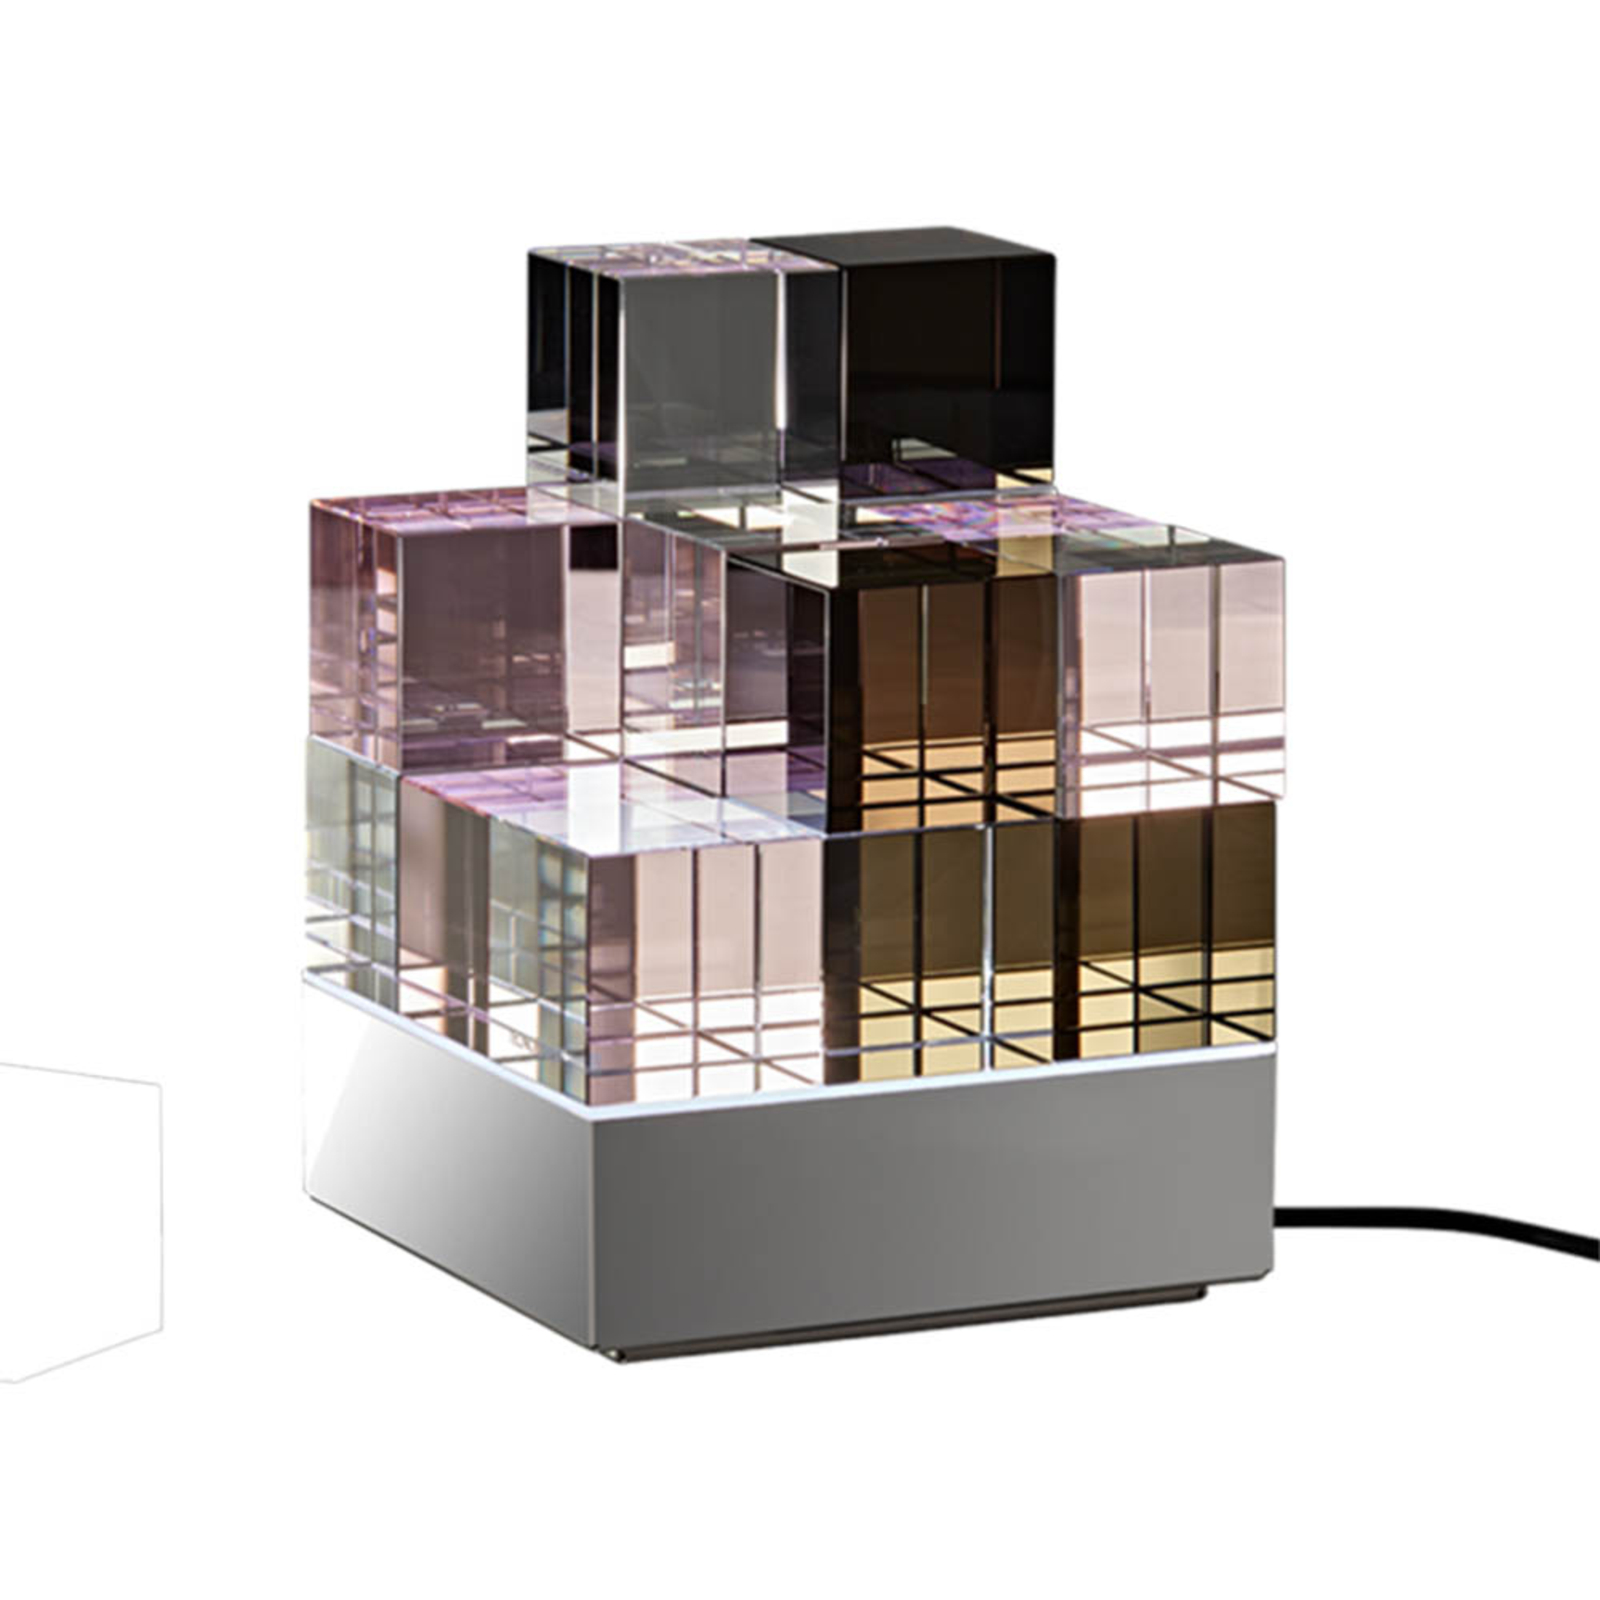 TECNOLUMEN Cubelight Move lampe de table, rose/noir